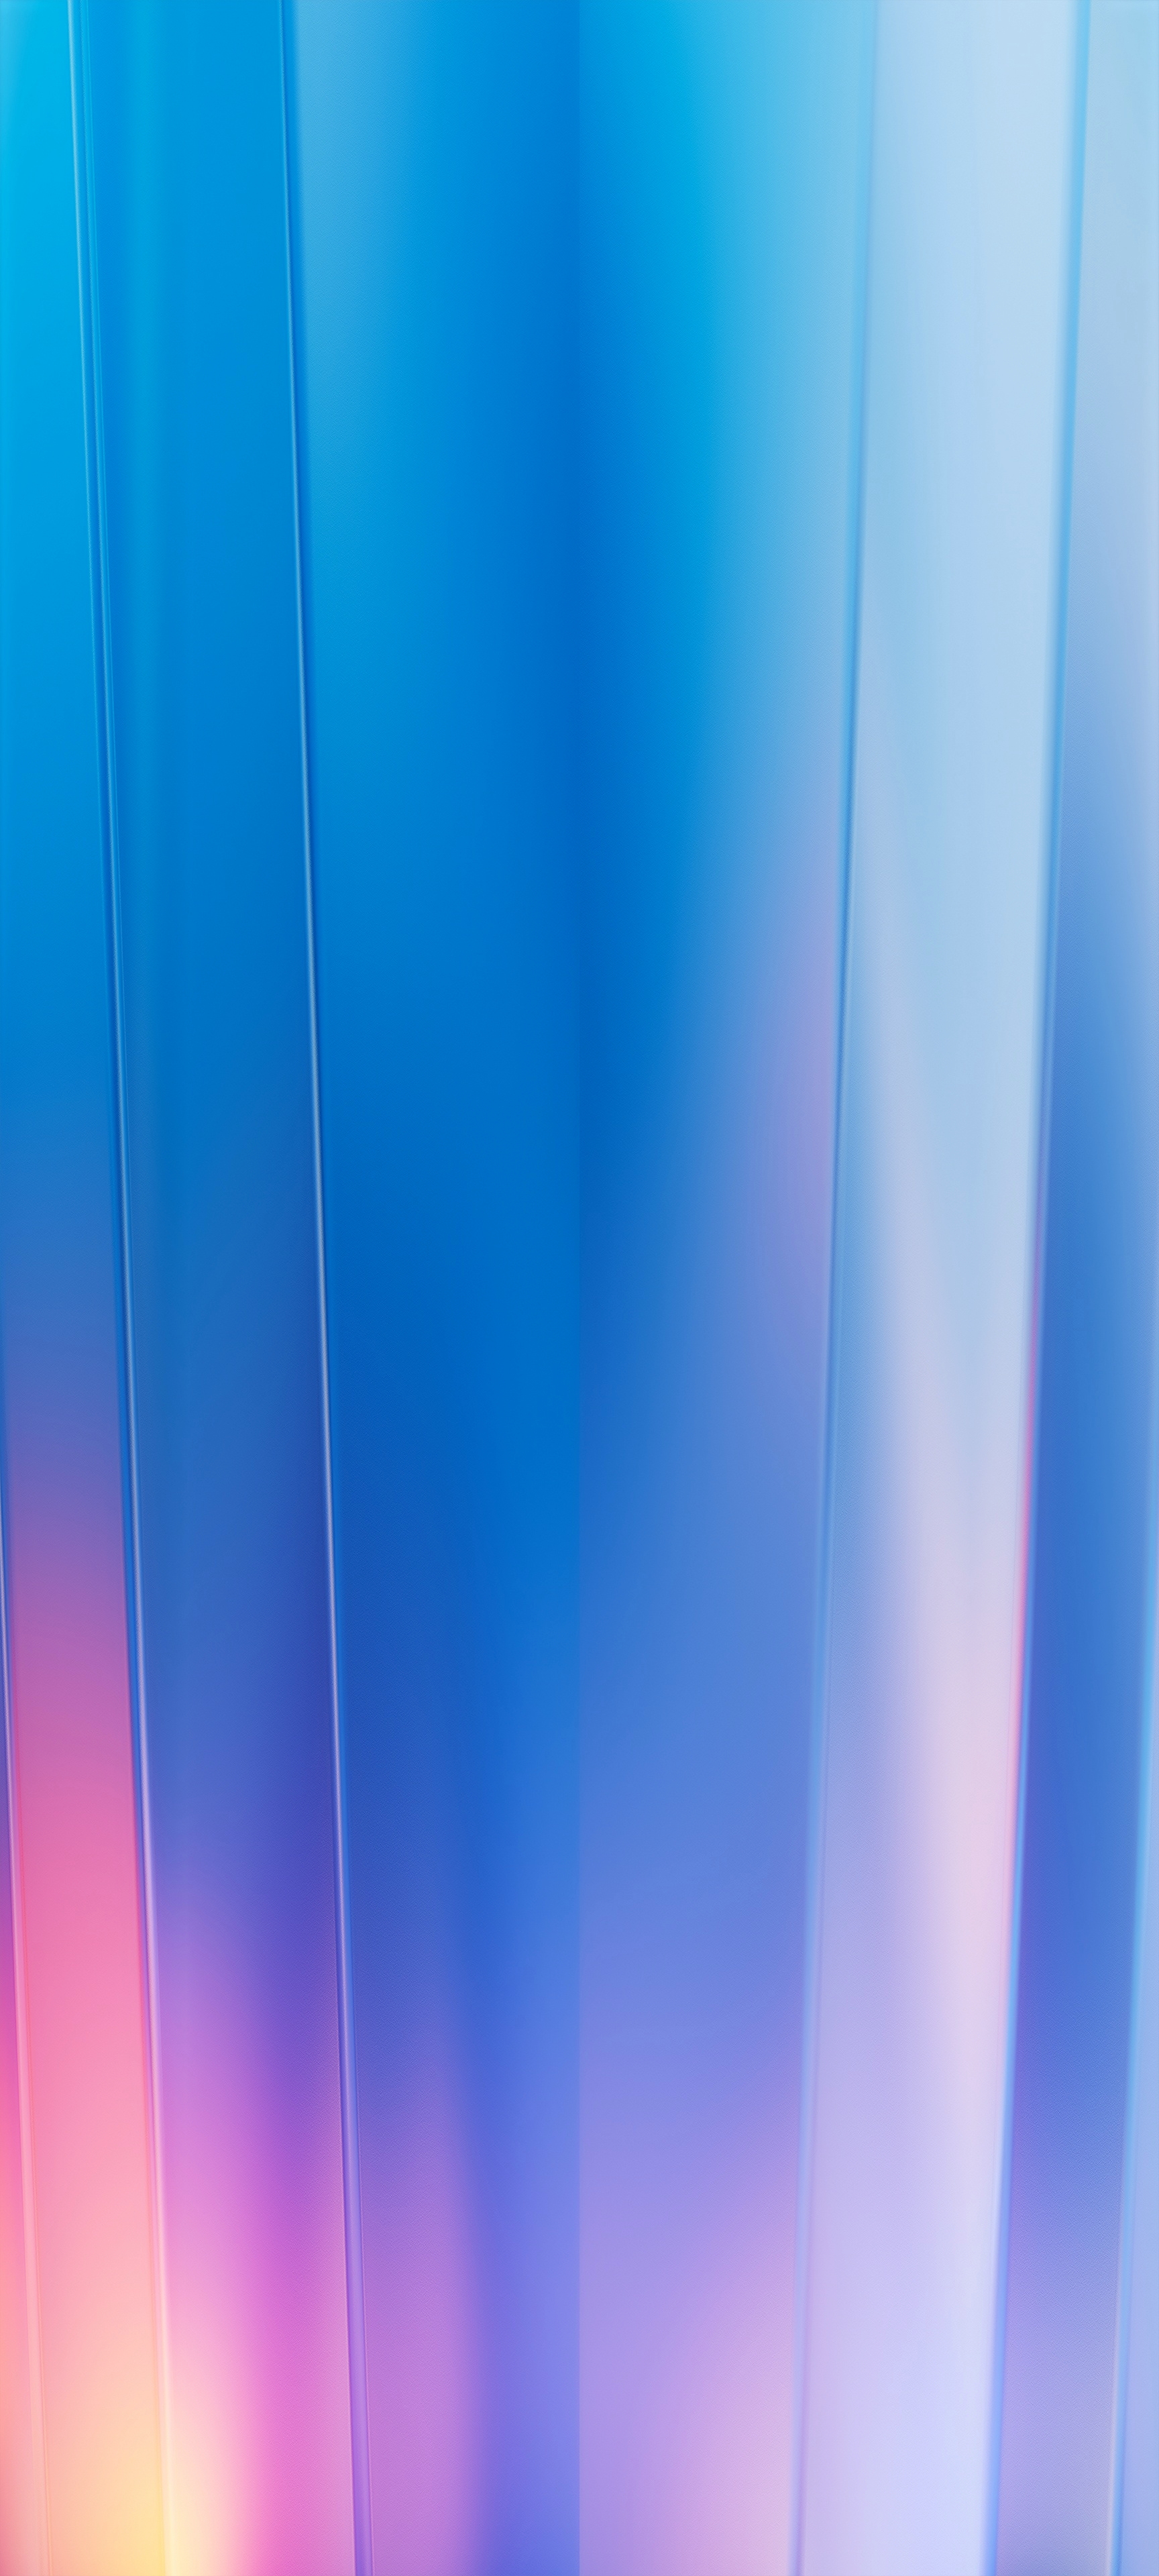 aesthetic blue wallpaper iphone